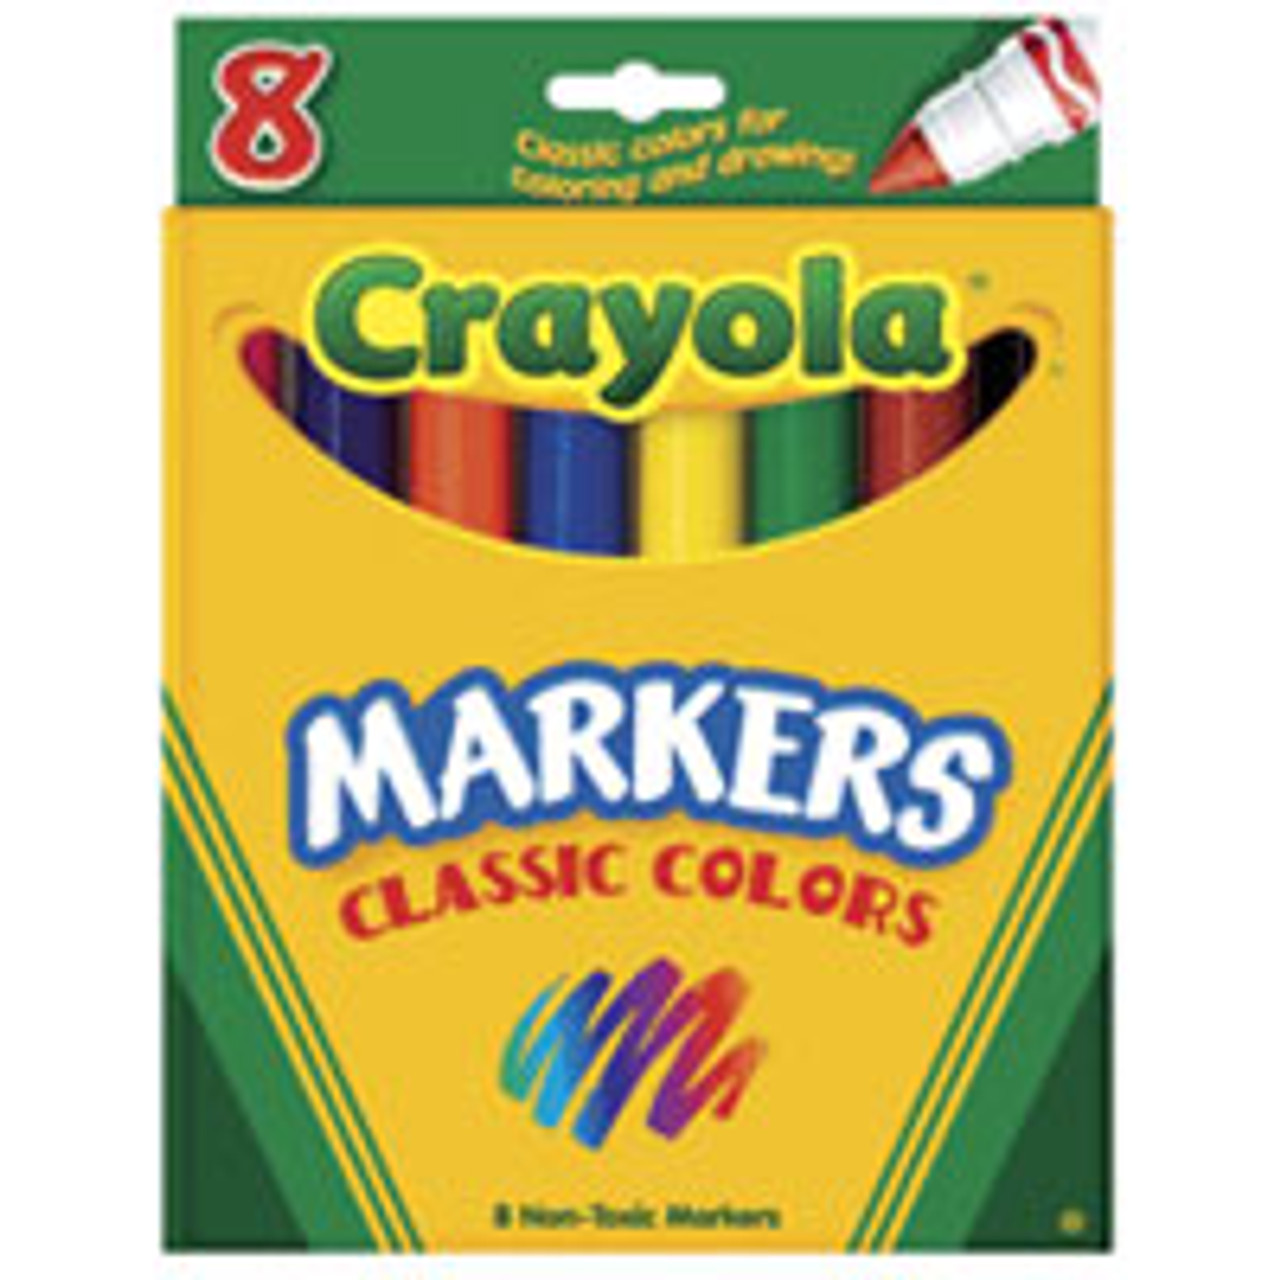 Crayola Broad Line Marker - Red